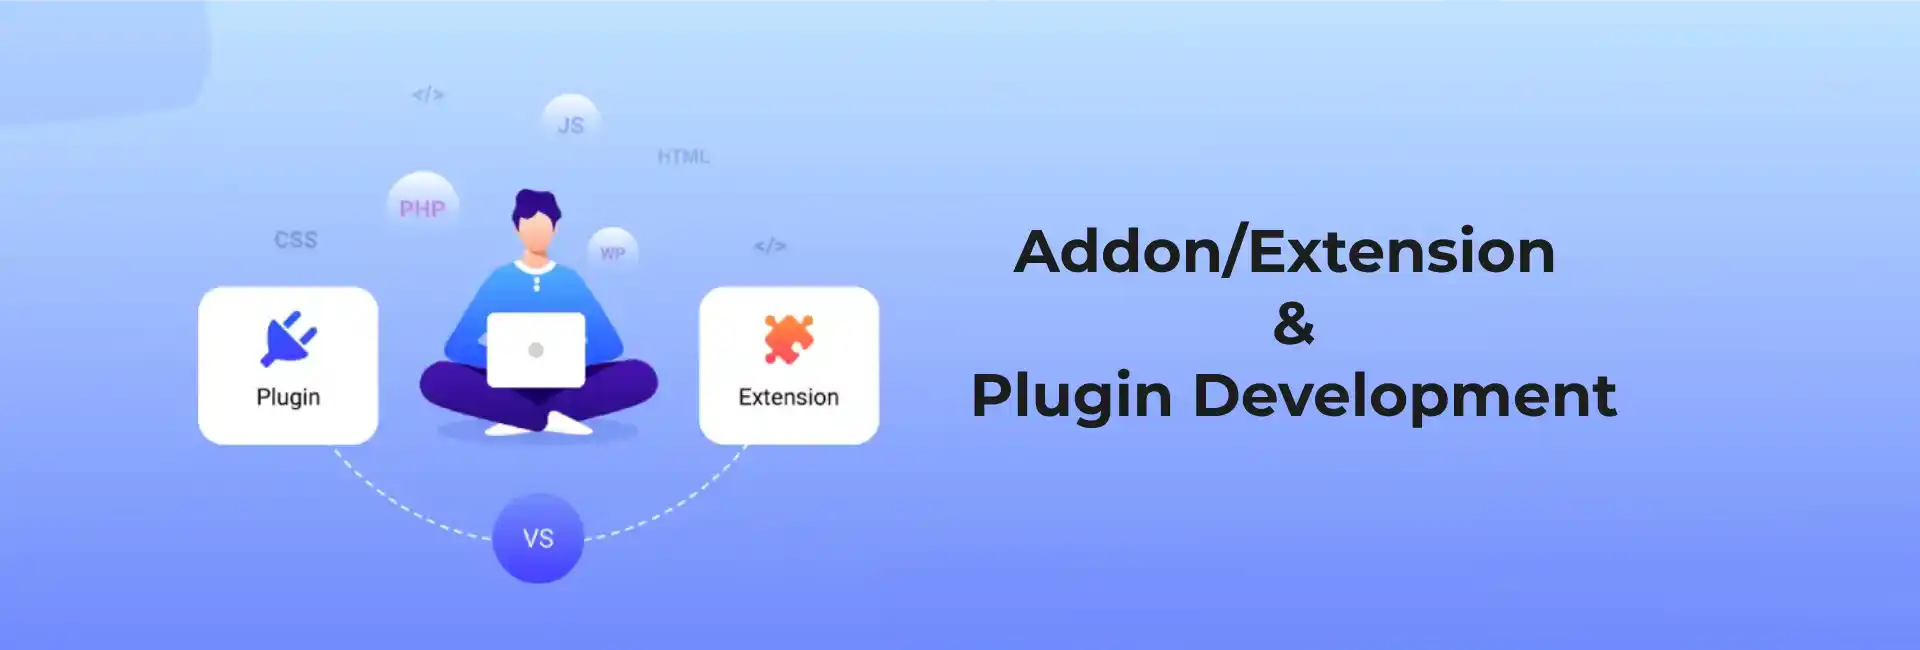 Image of Addon/Extension & Plugin Development